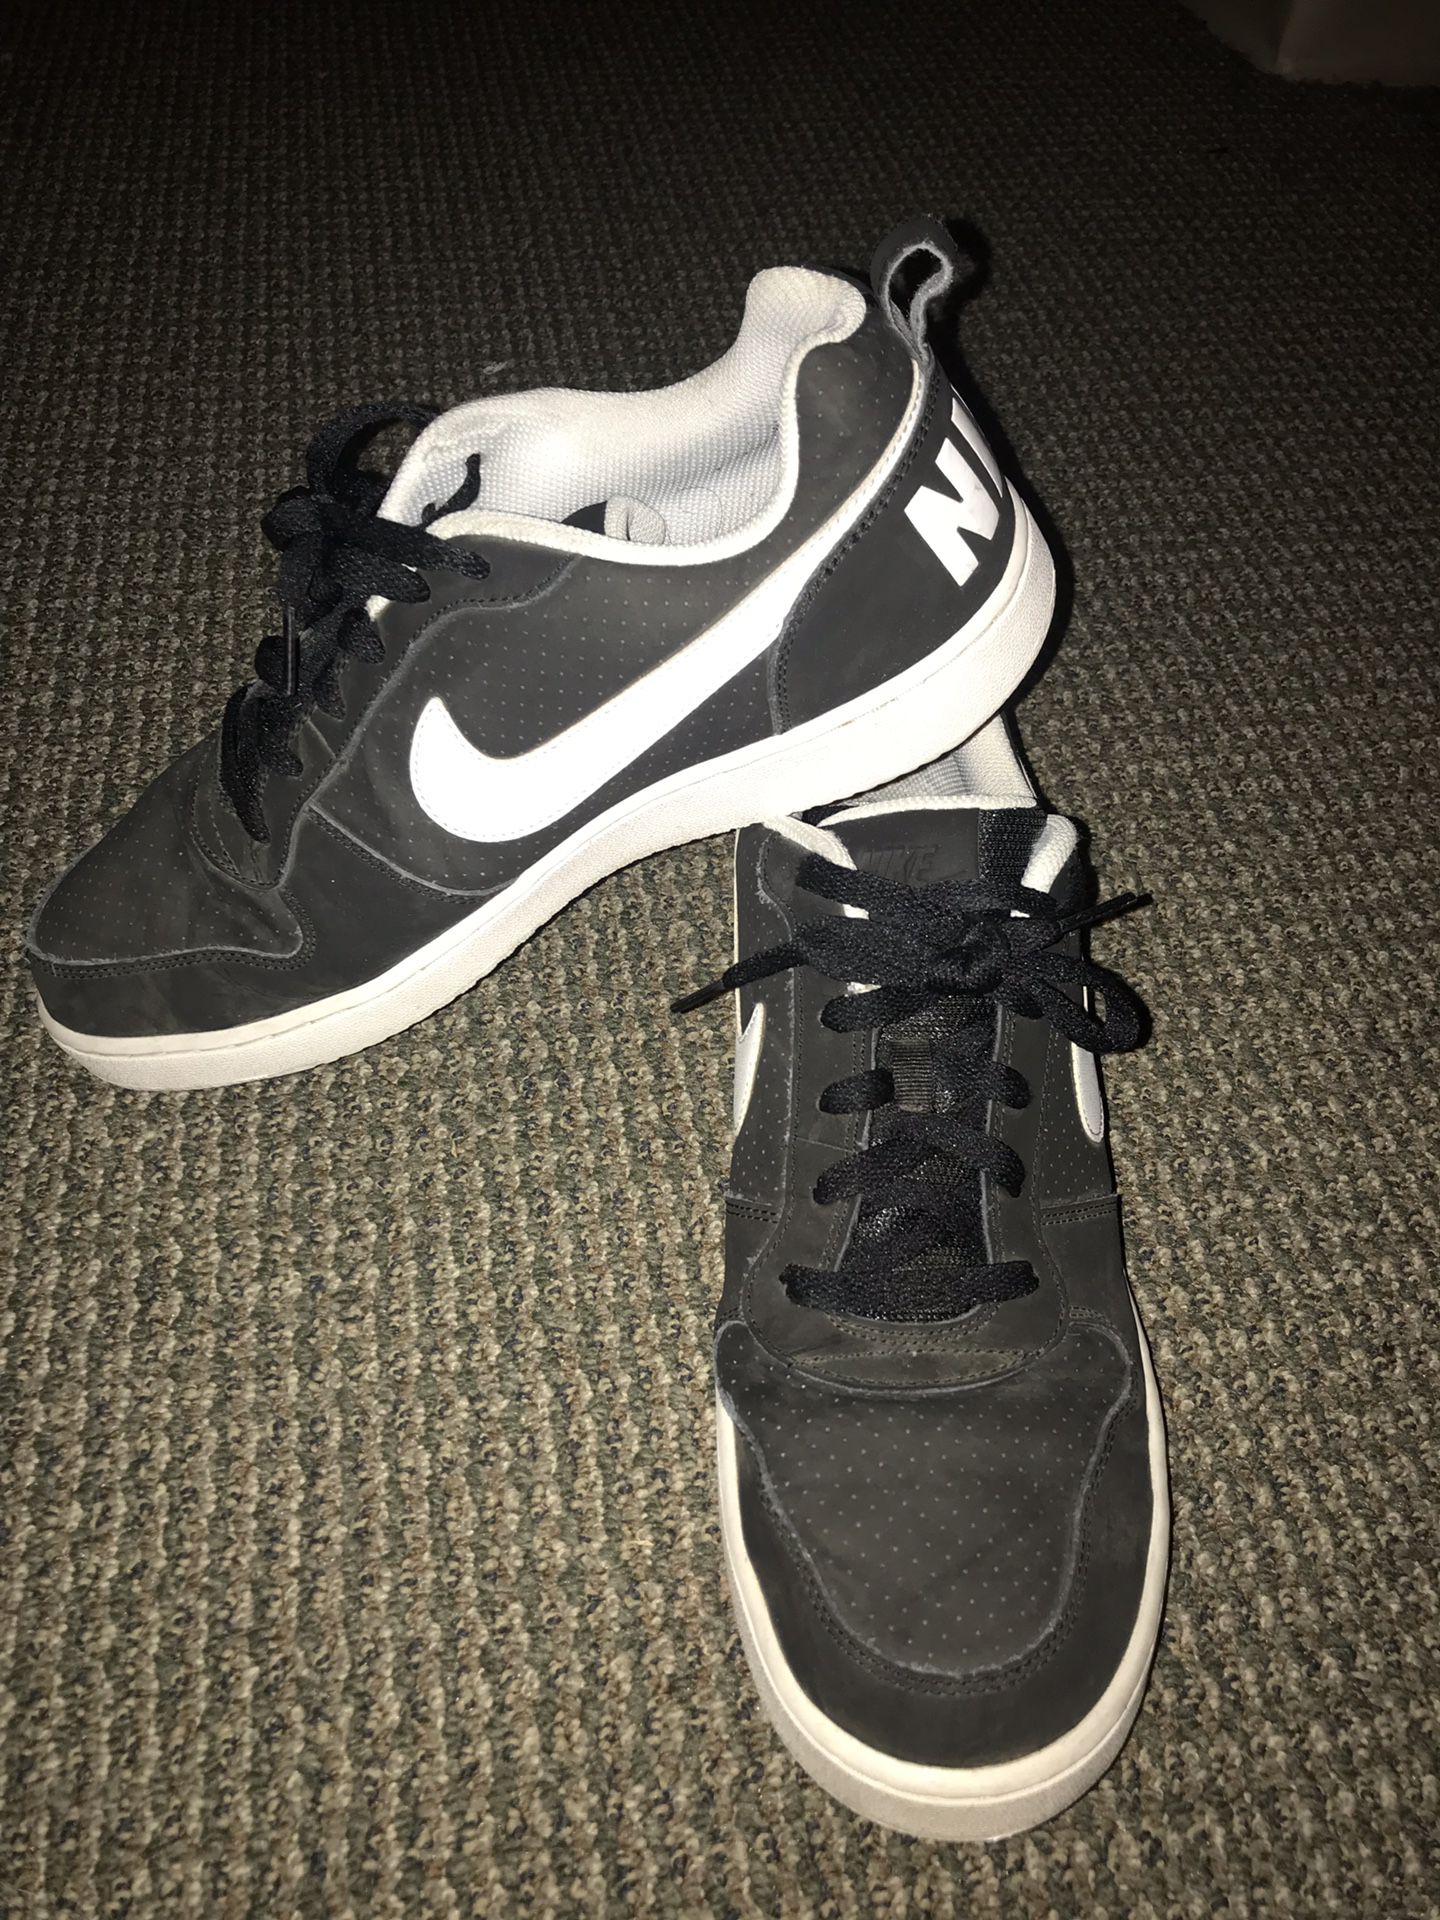 Nike SB shoes